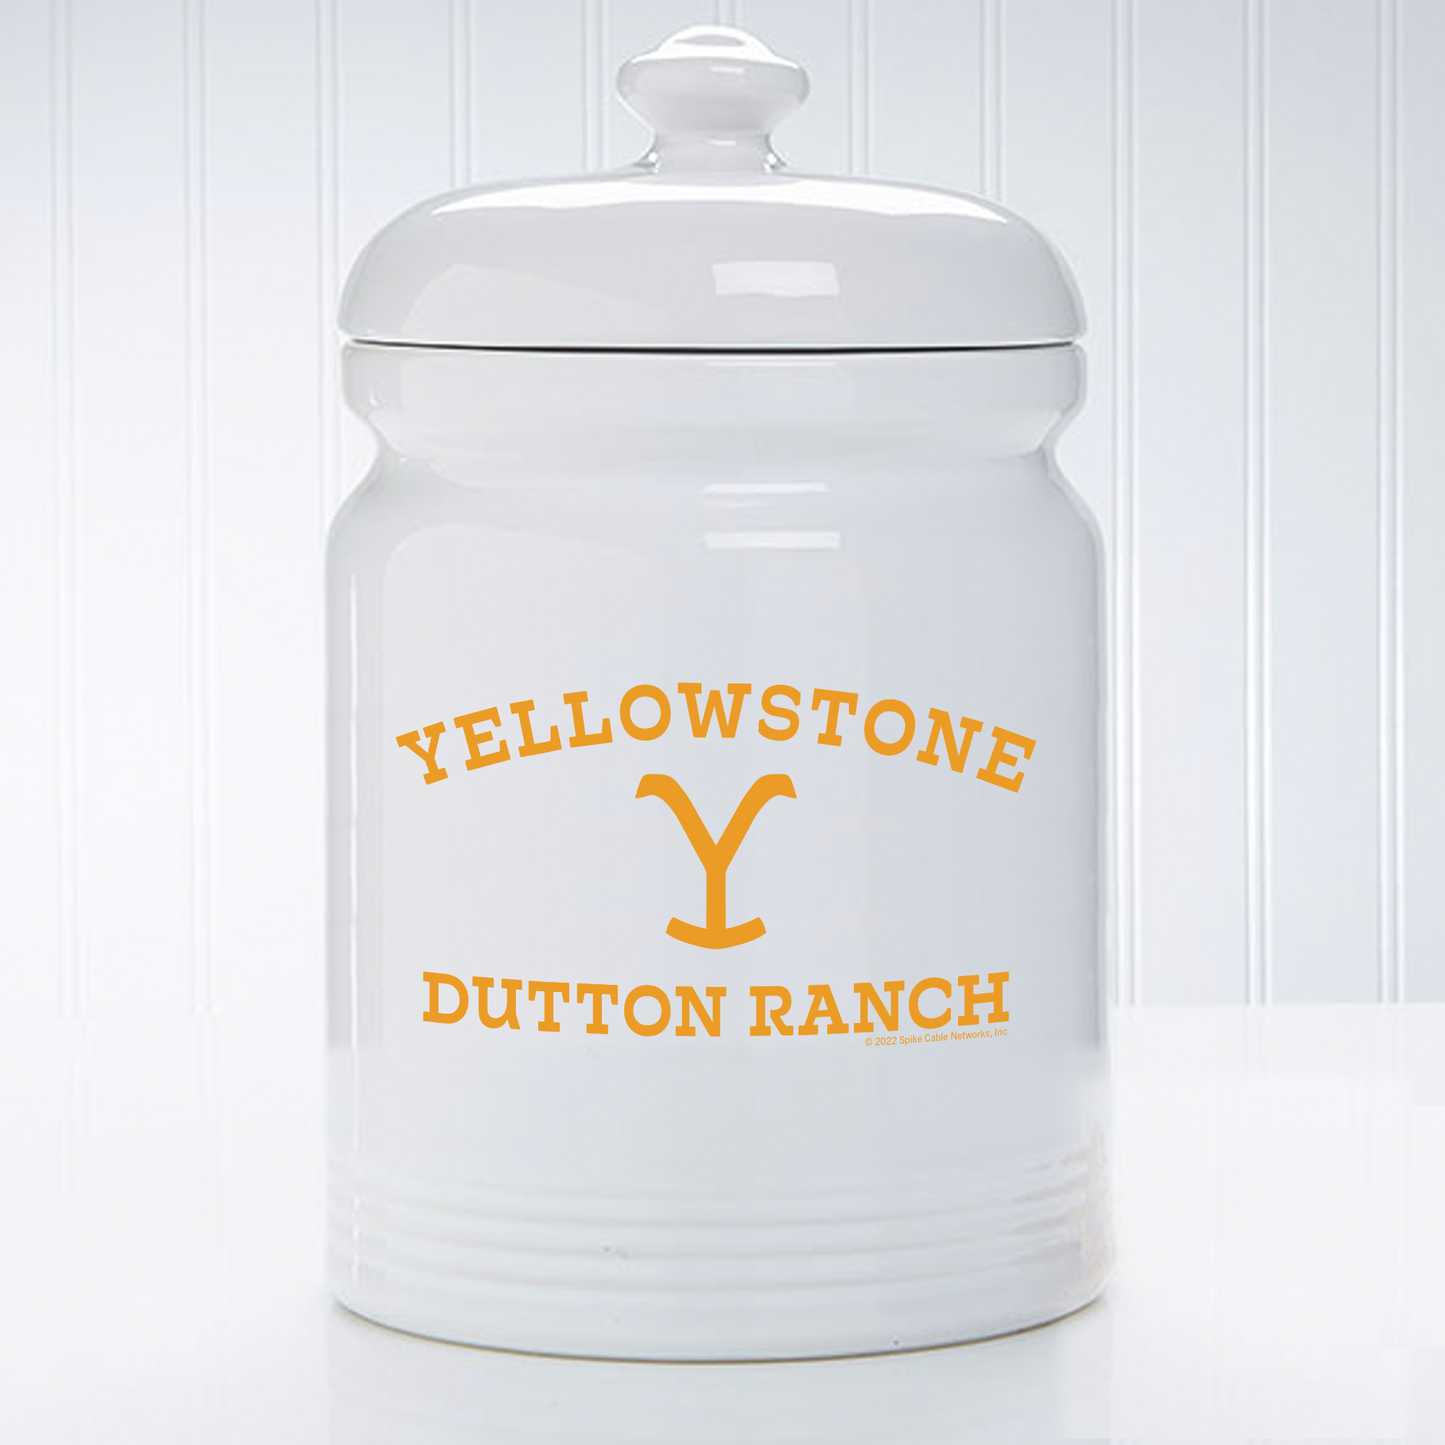 Yellowstone Dutton Ranch Logo Pet Treat Jar